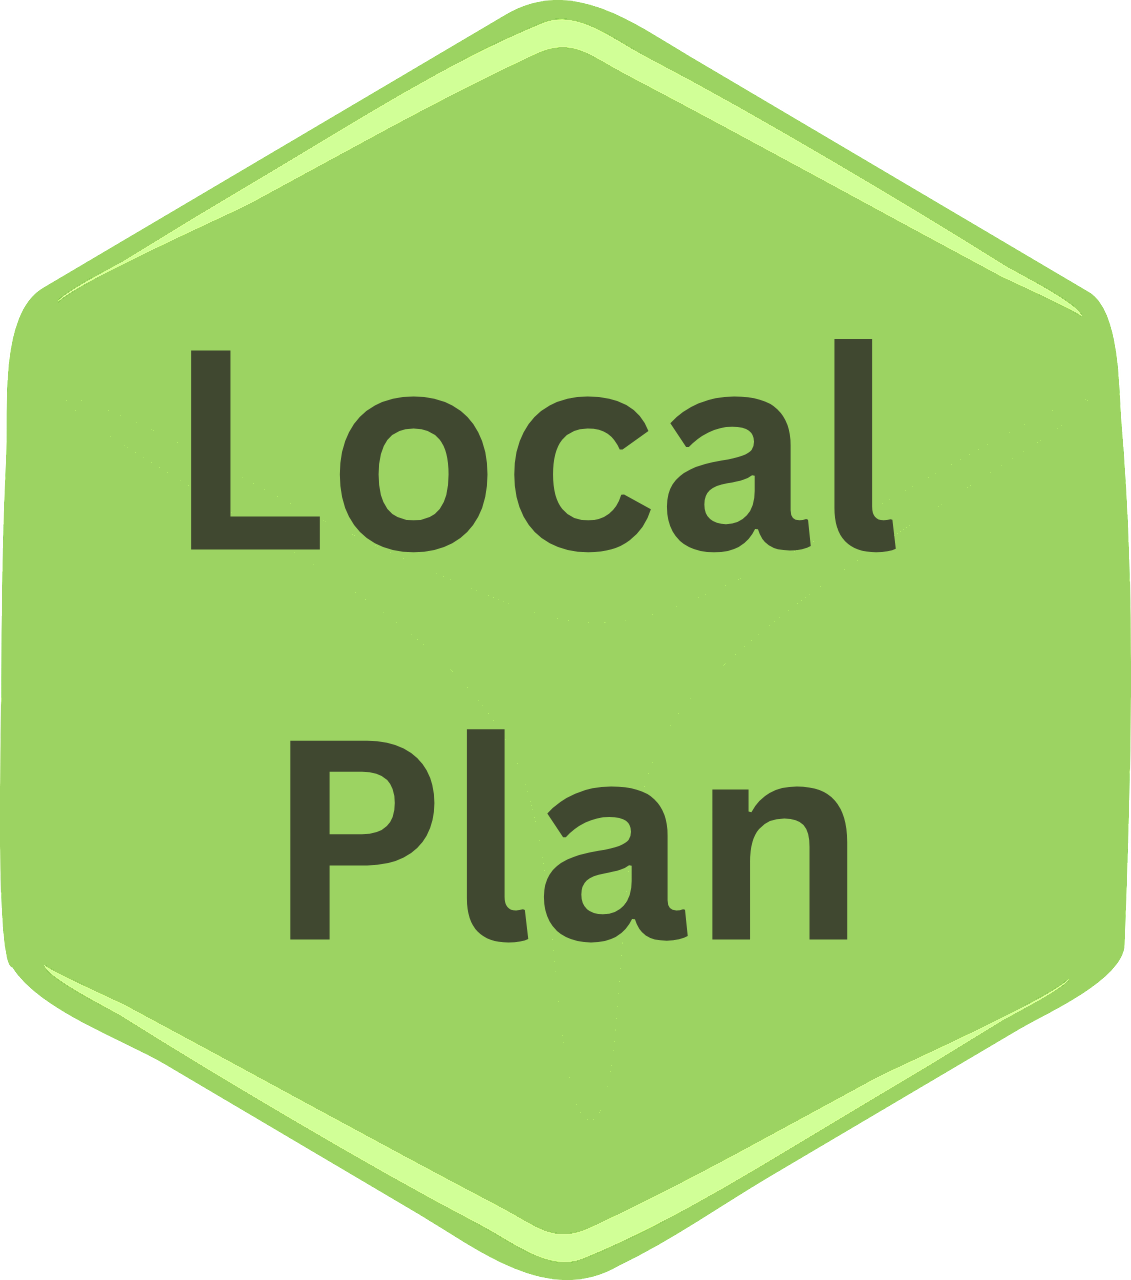 Local plan redirect to PDF